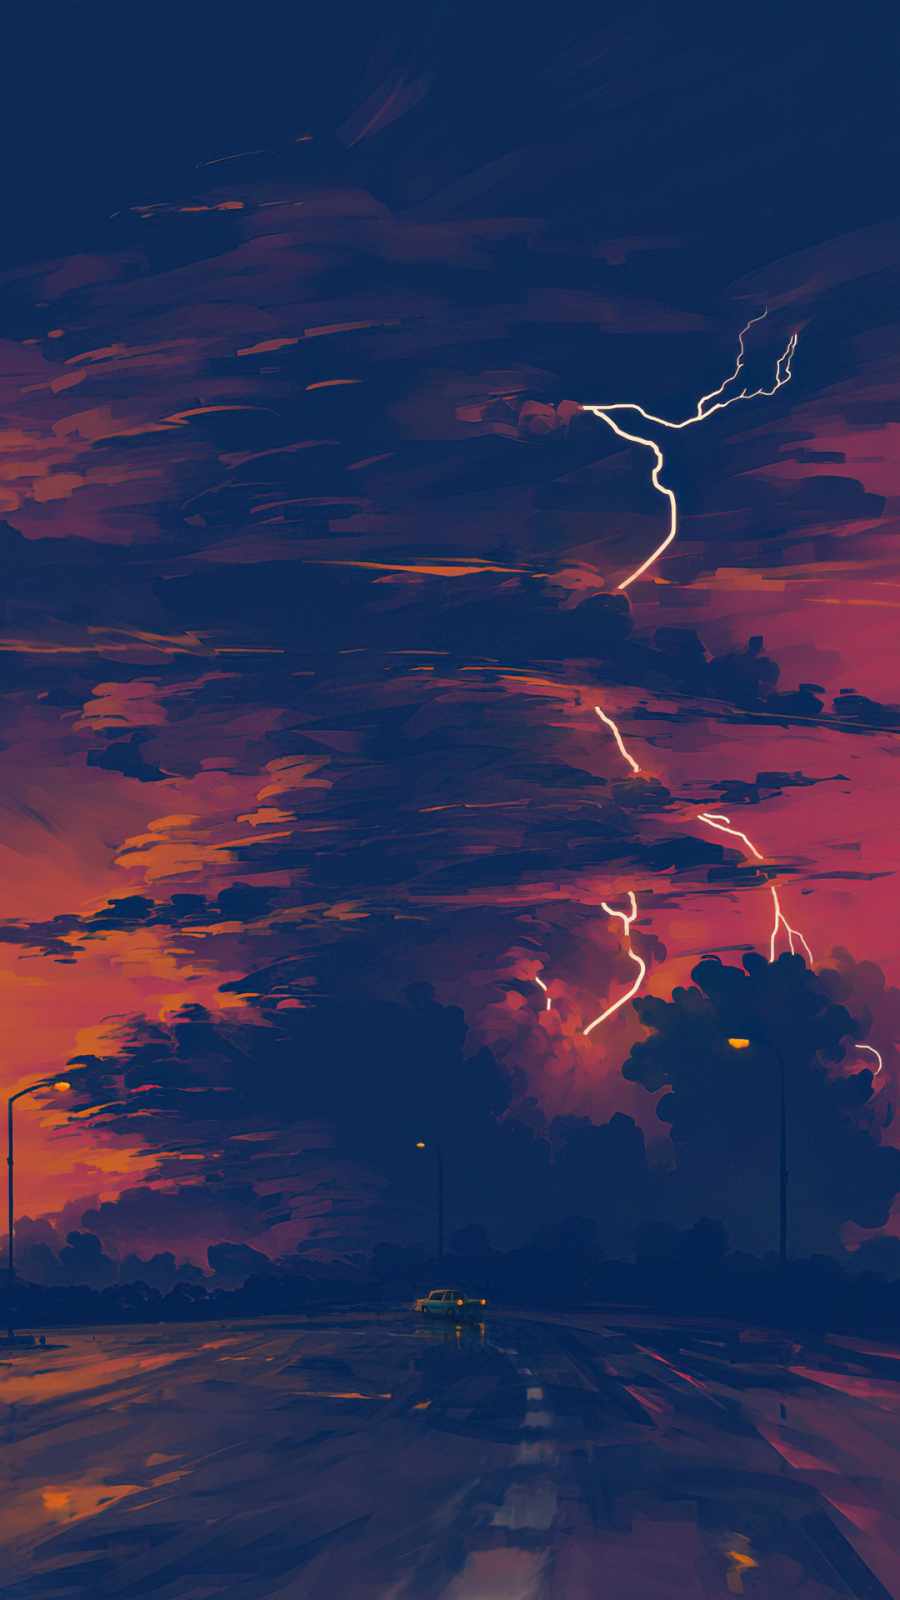 Lightning while travelling